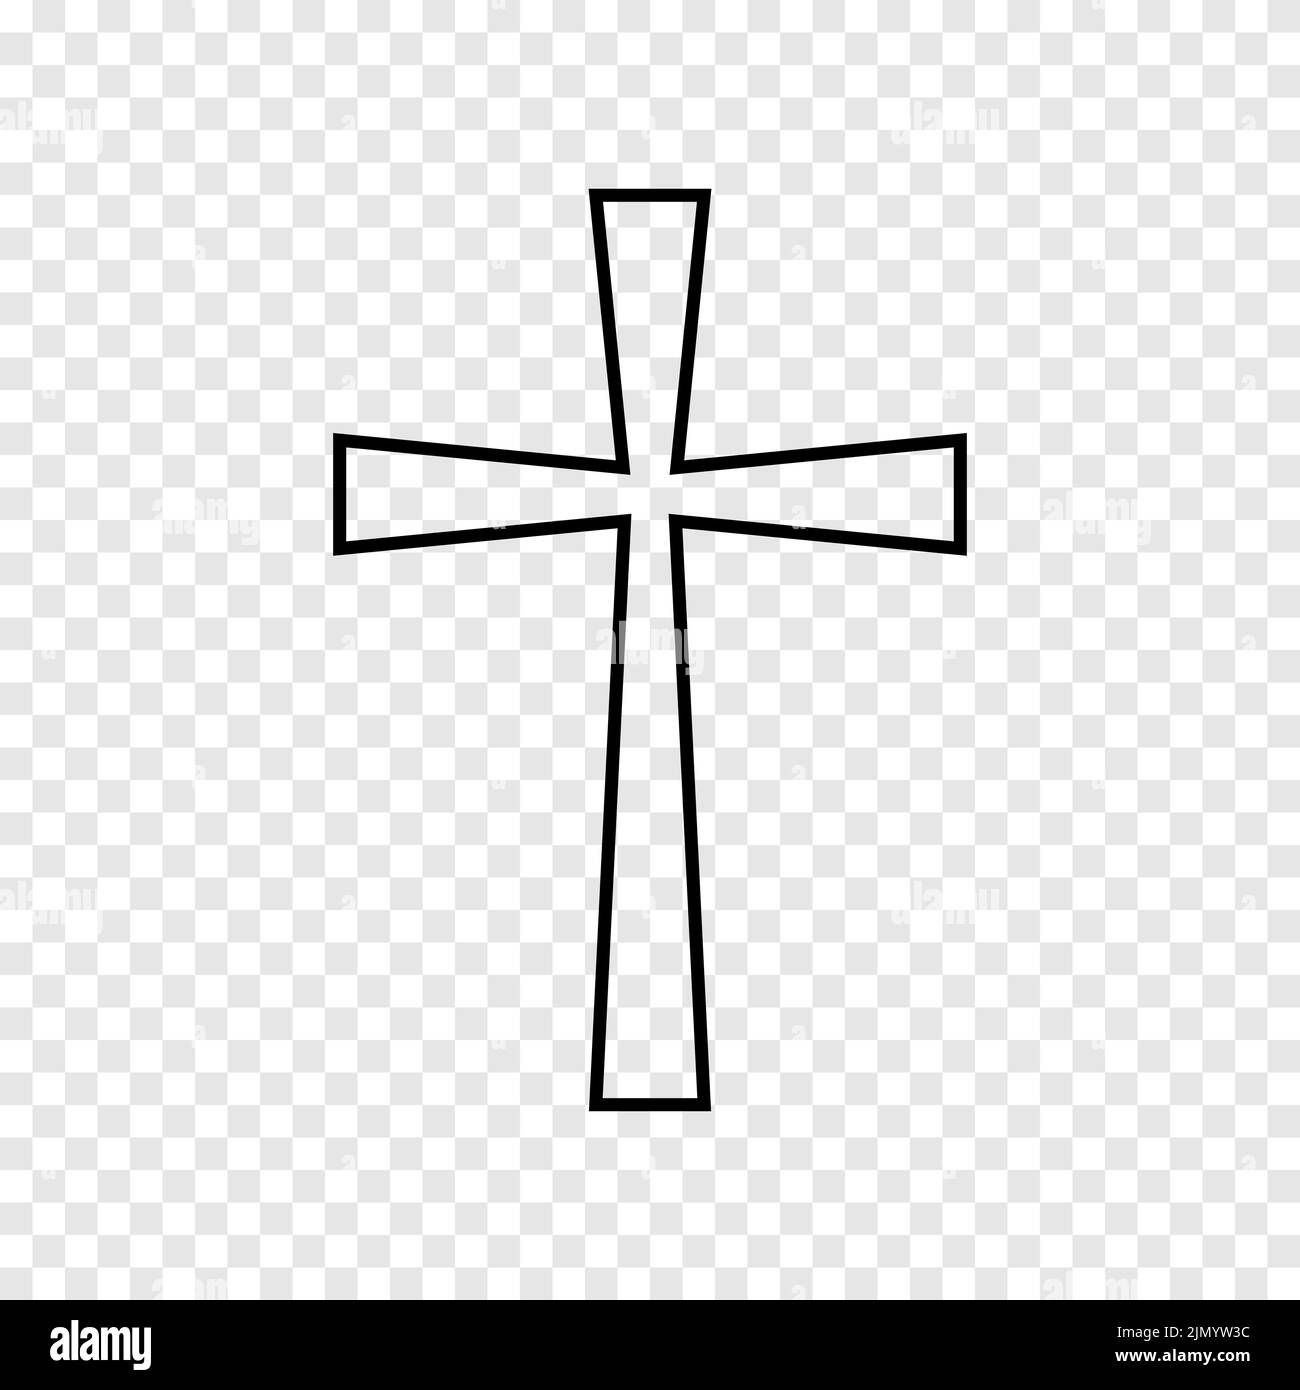 Christian cross icon simple design Stock Vector